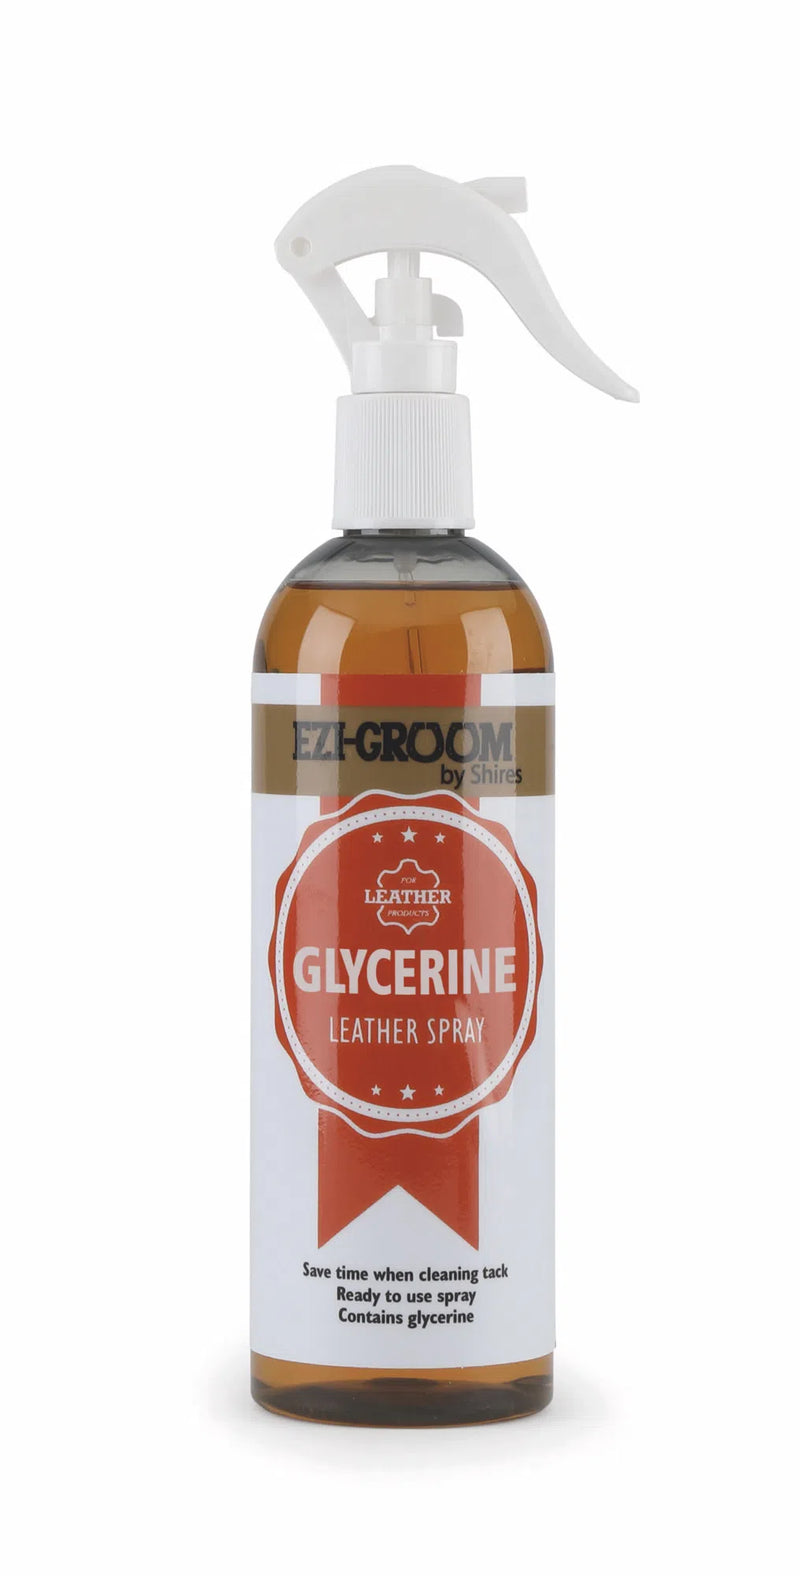 EZI-Groom Glycerine Leather Spray